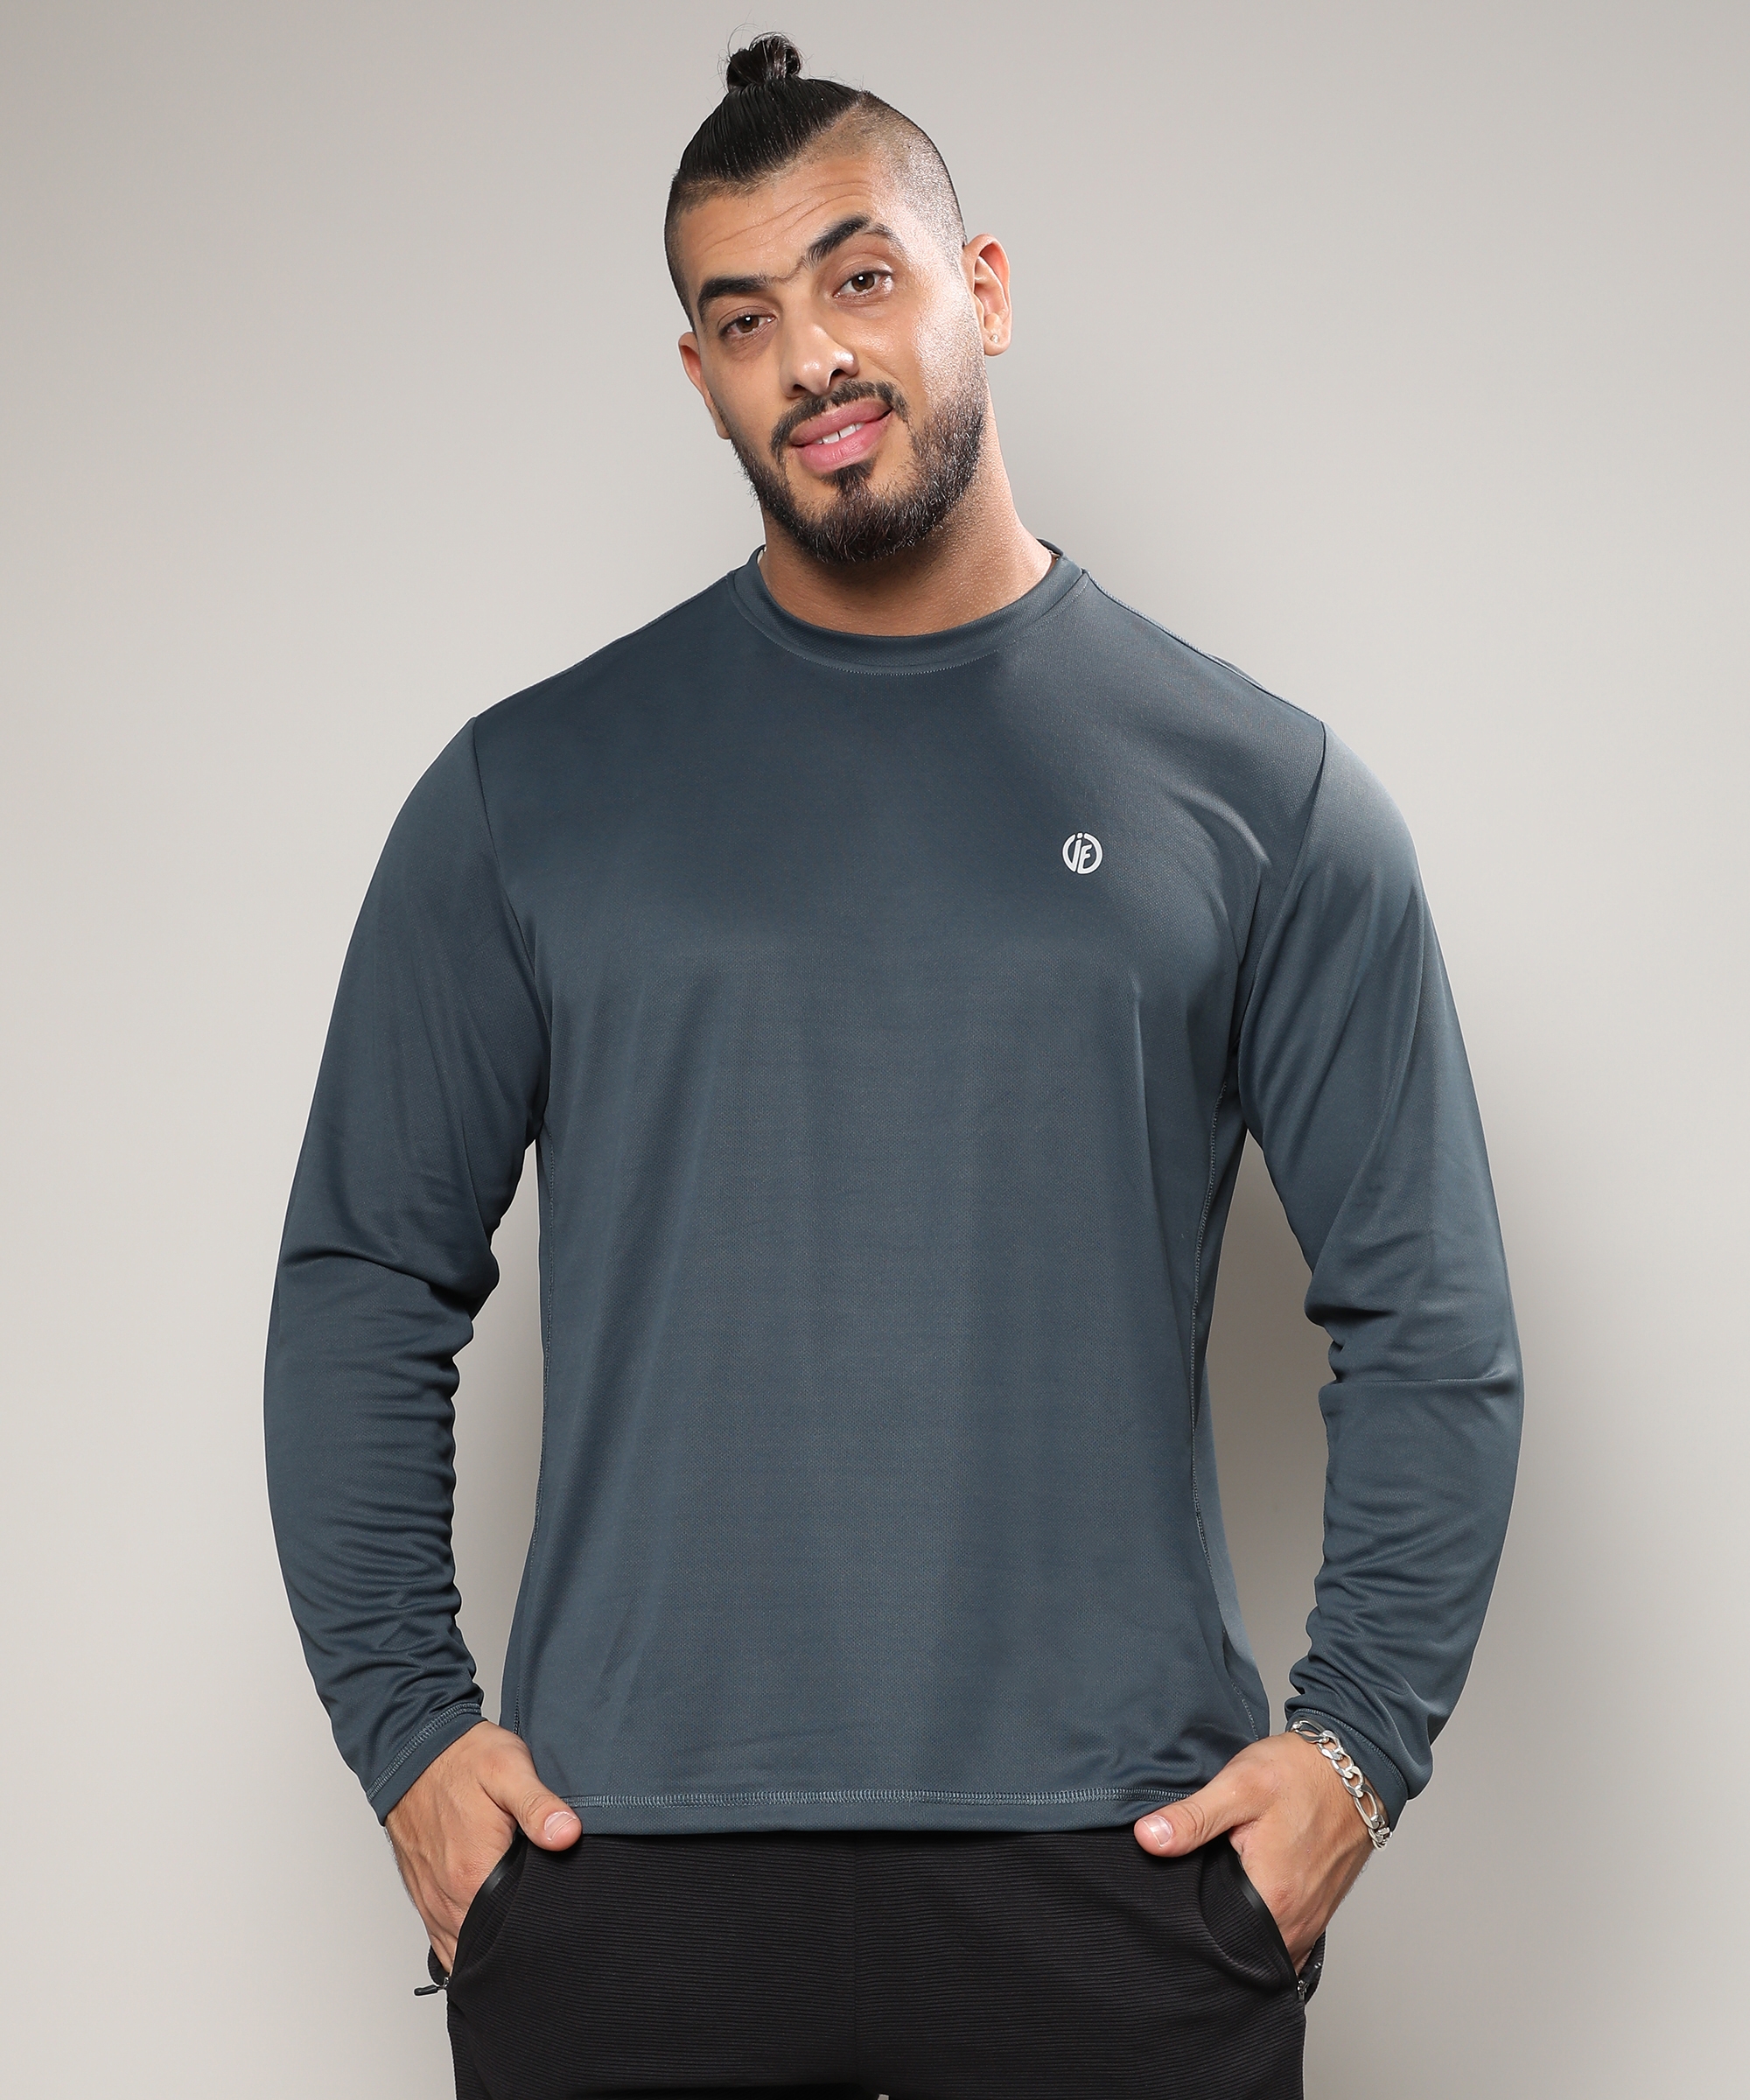 Instafab Plus | Men's Charcoal Grey Basic Activewear T-Shirt